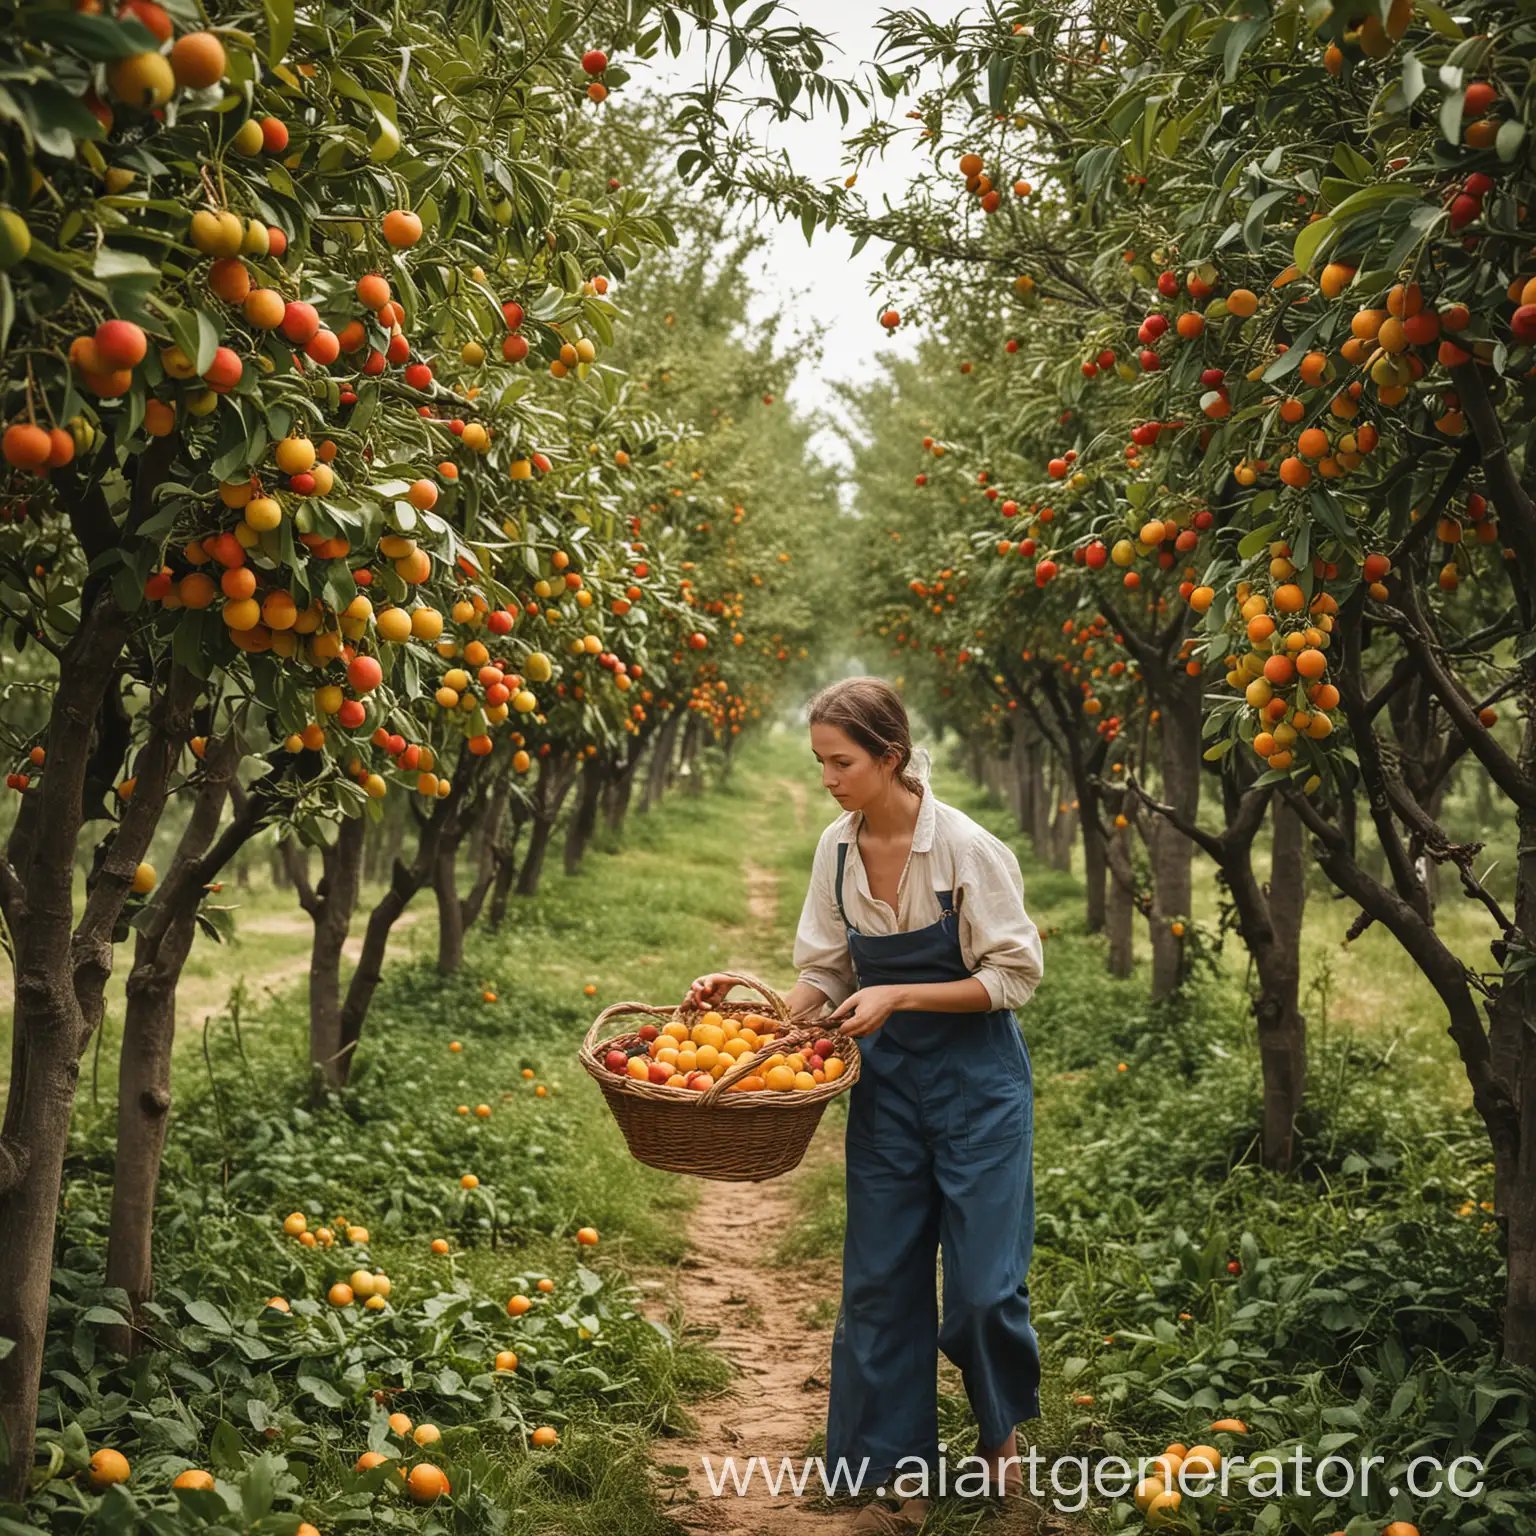 Fruit-Gatherer-Harvesting-Fresh-Fruits-in-Vibrant-Orchard